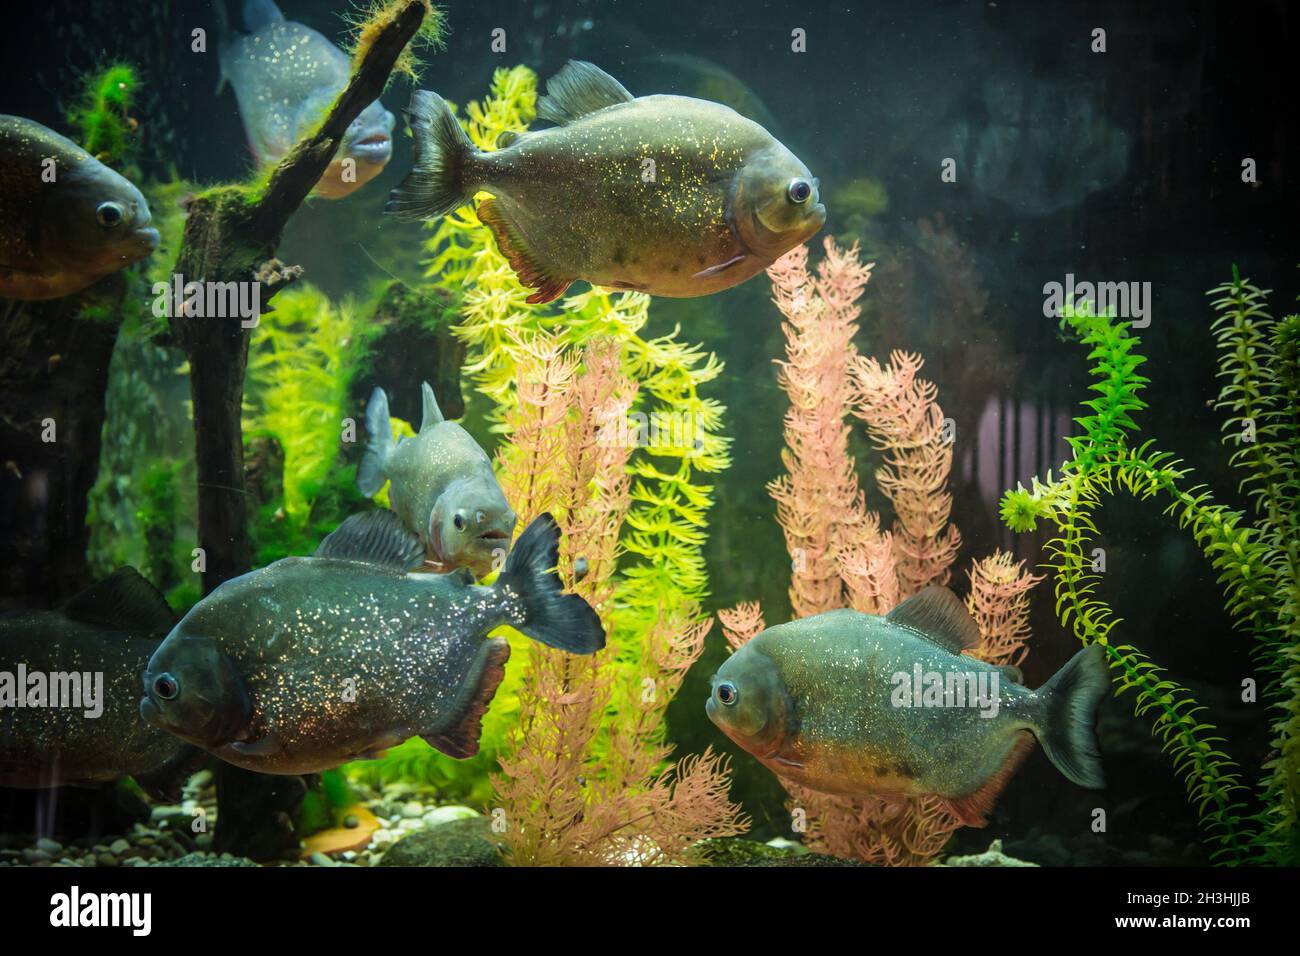 Shoal of tropical piranha fishes in freshwater aquarium Stock Photo